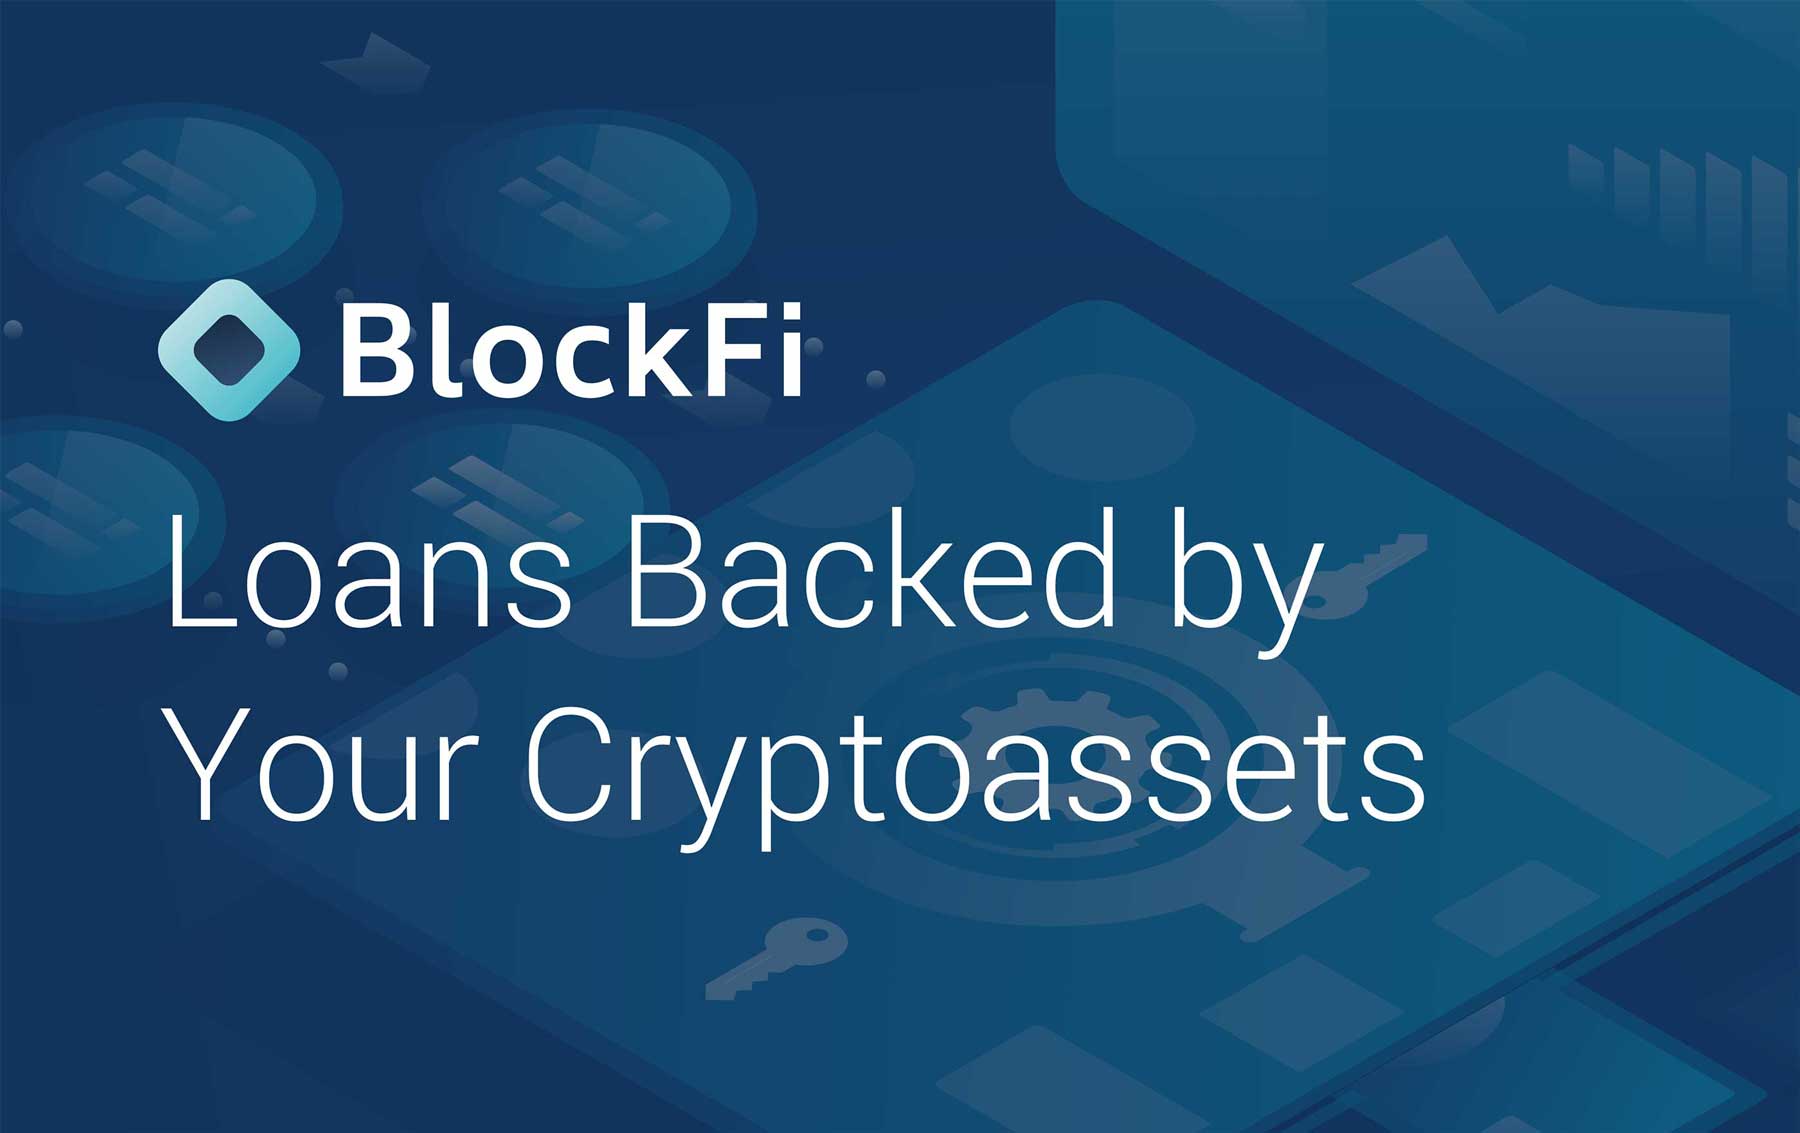 BlockFi Crypto Interest Account and Loans